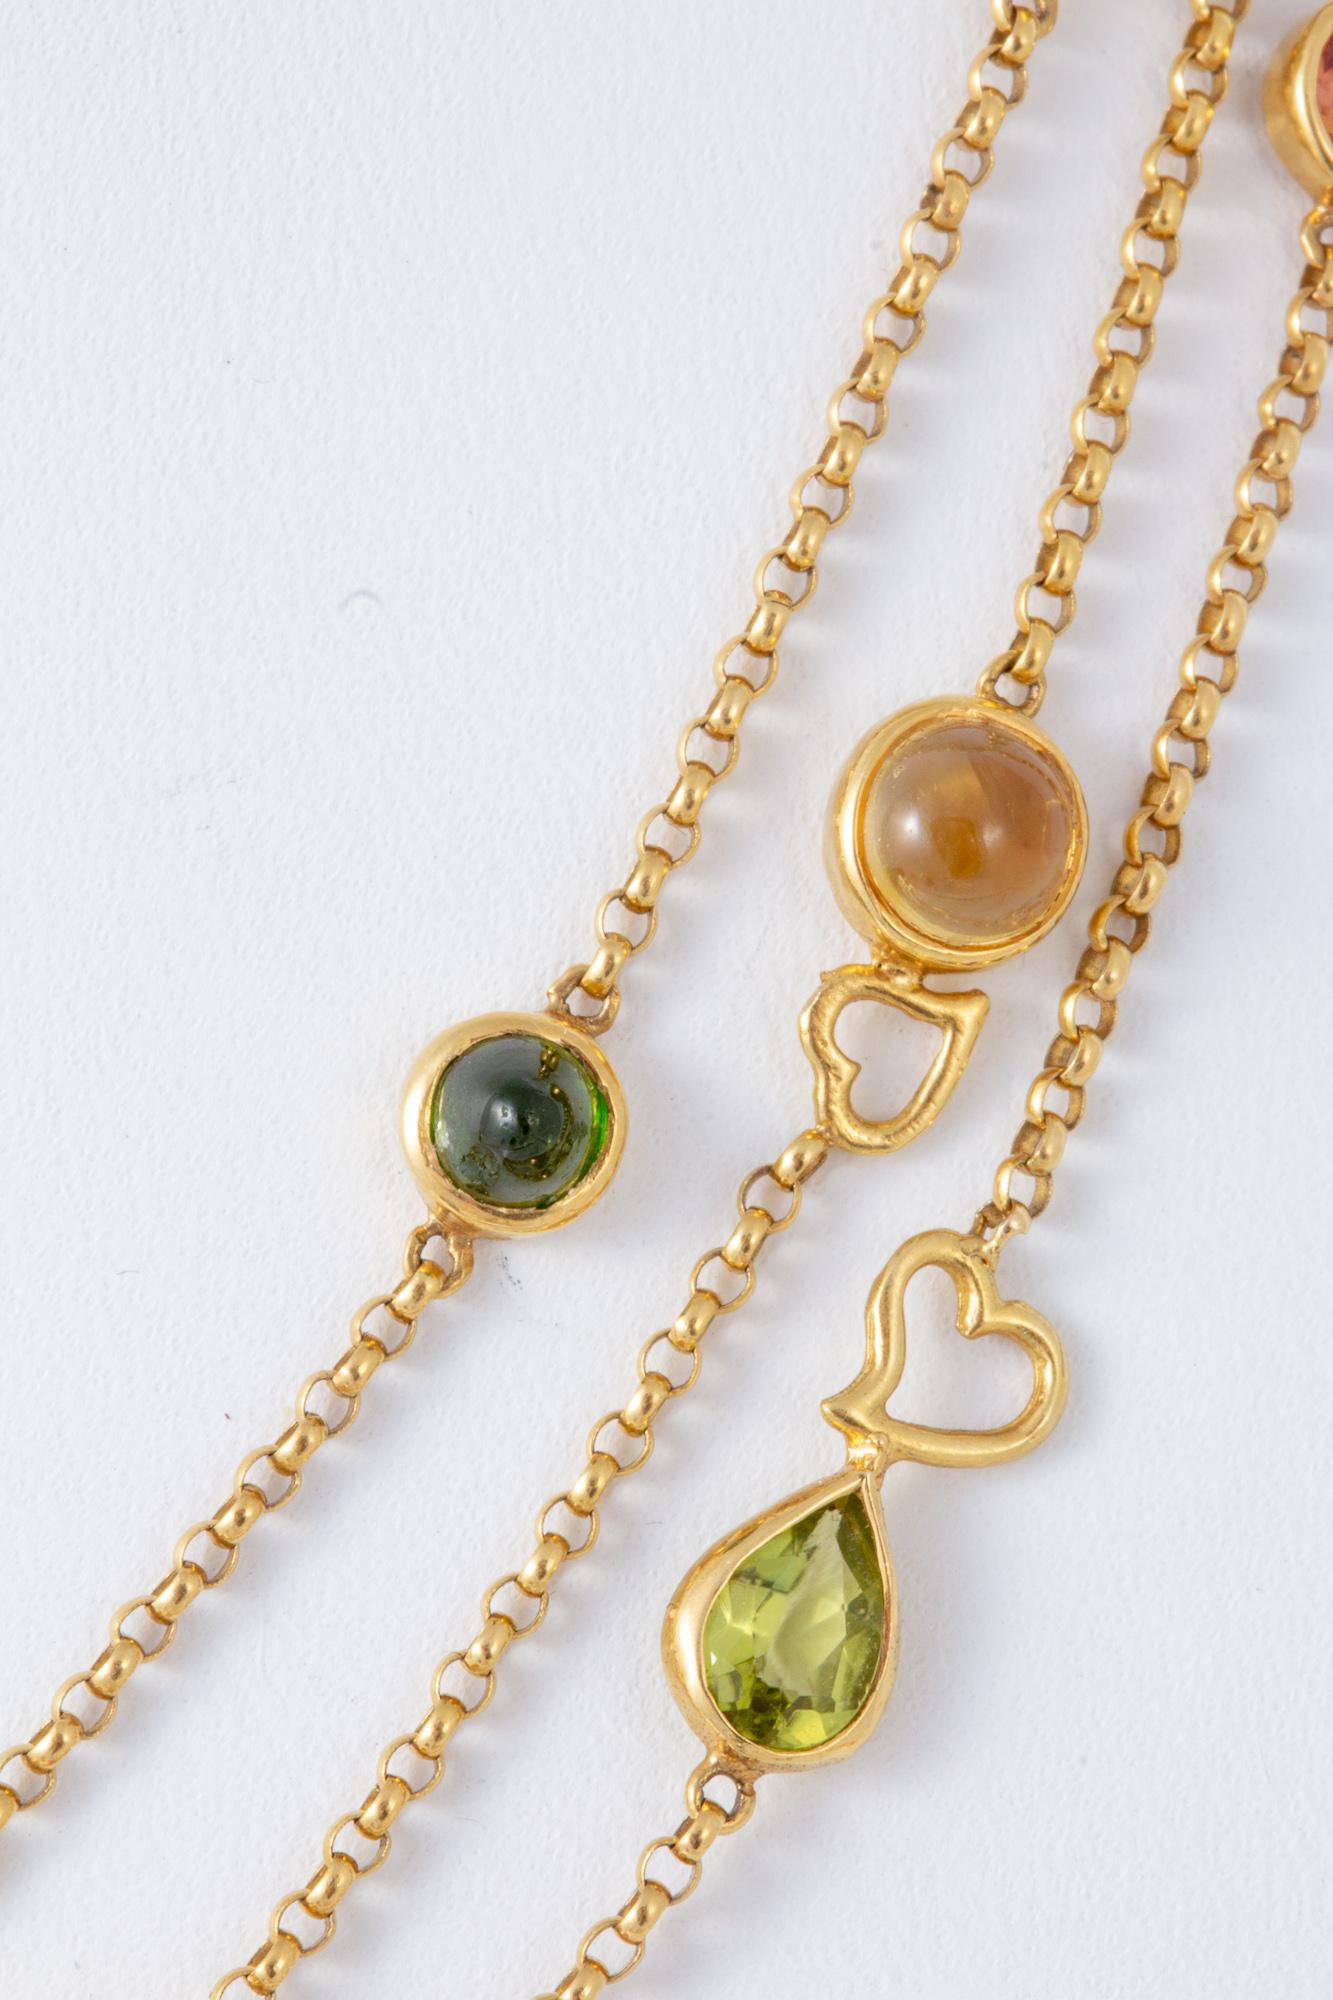 Women's or Men's Amazing Handcrafted Bezel Set of Multicolored Gemstone Necklace in 18 Karat Gold